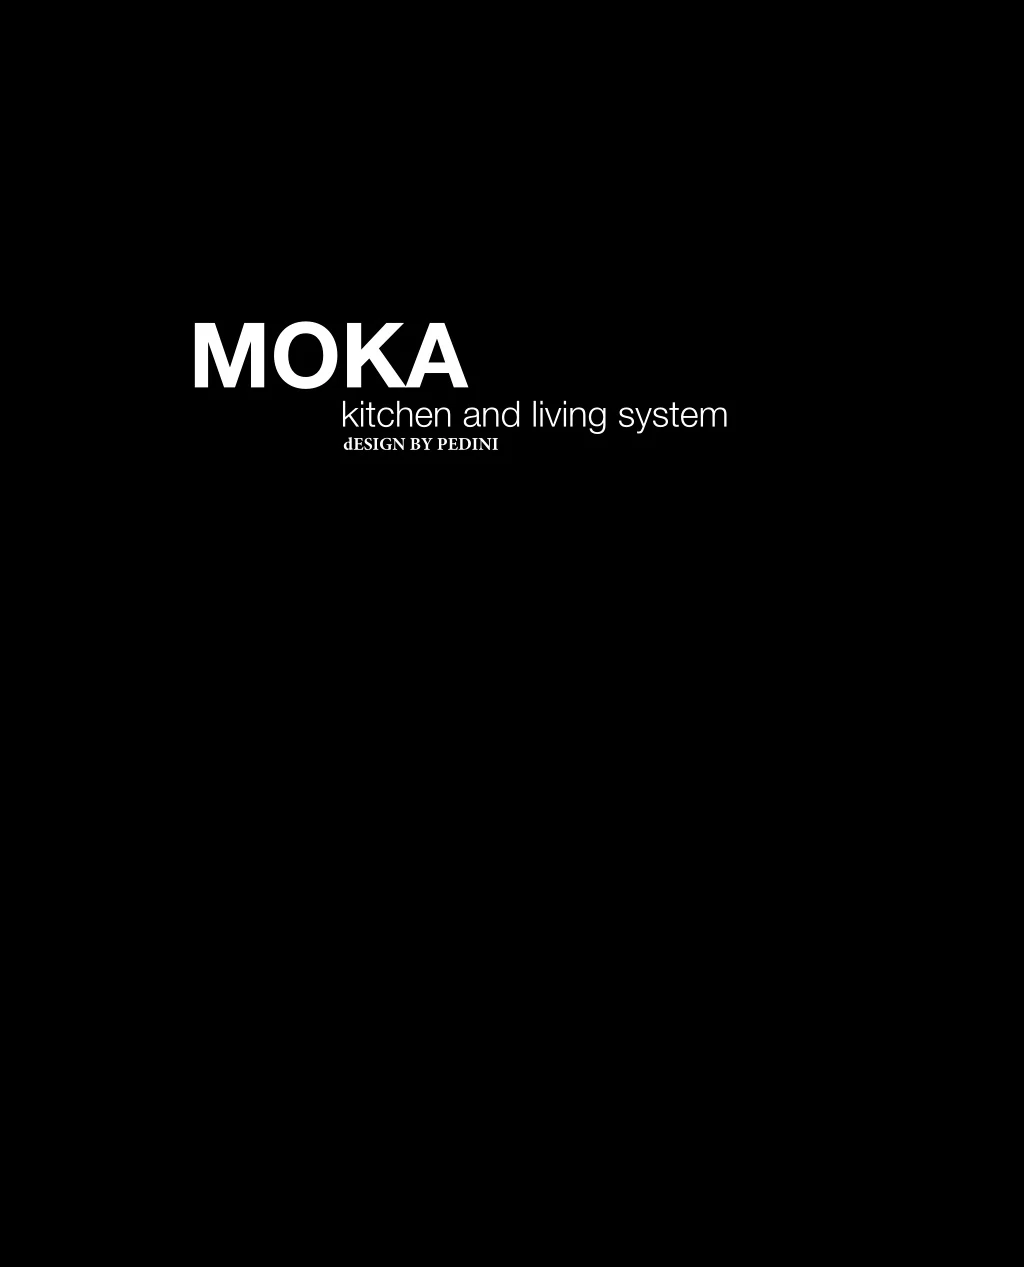 moka kitchen and living system design by pedini